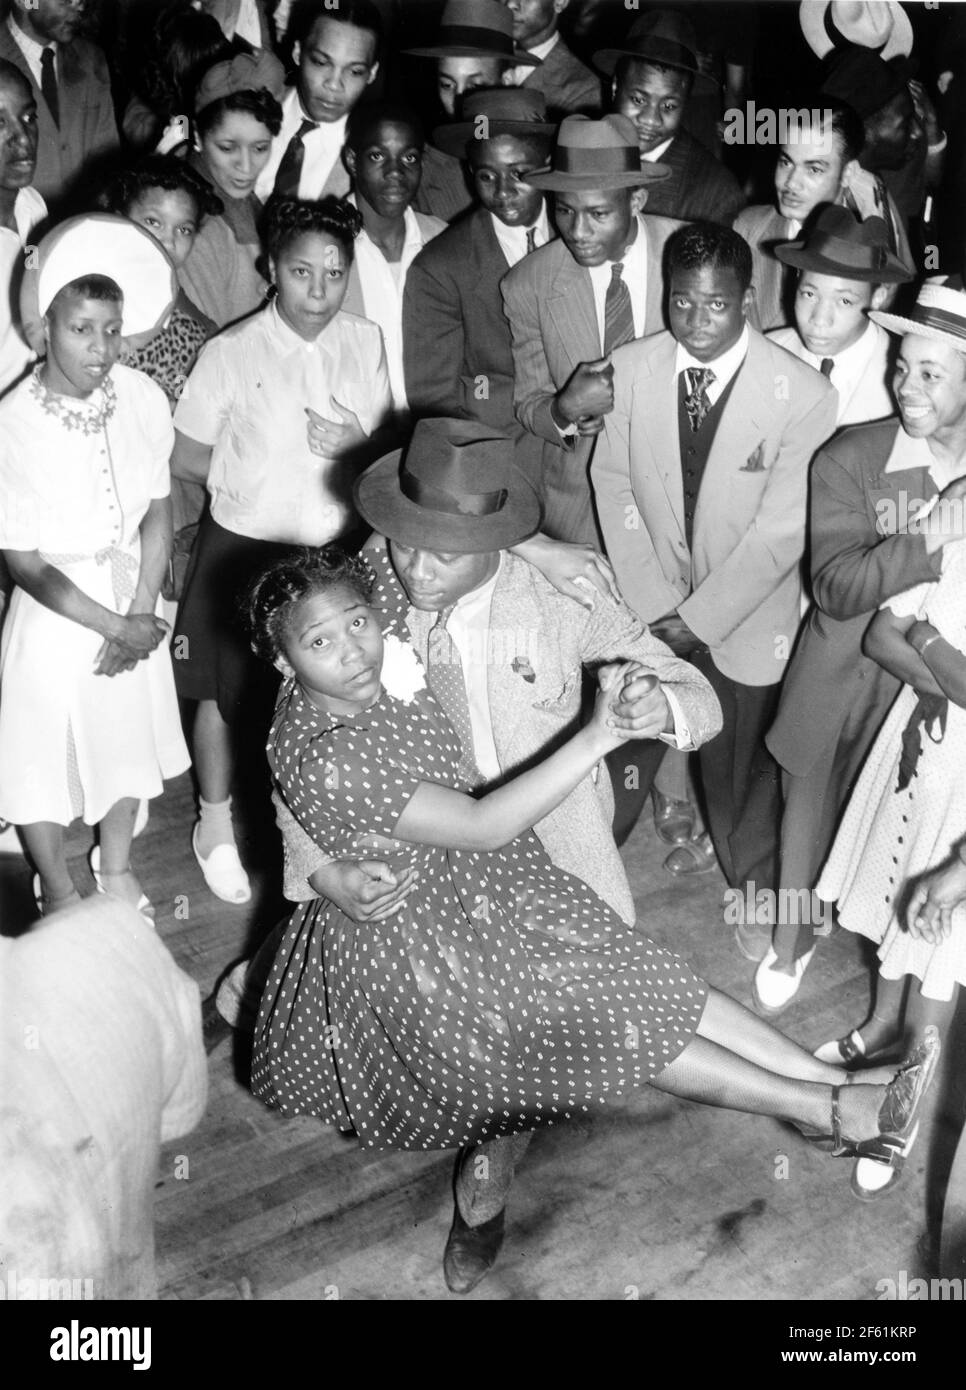 Jazz Club Dancers, 1940er Jahre Stockfoto